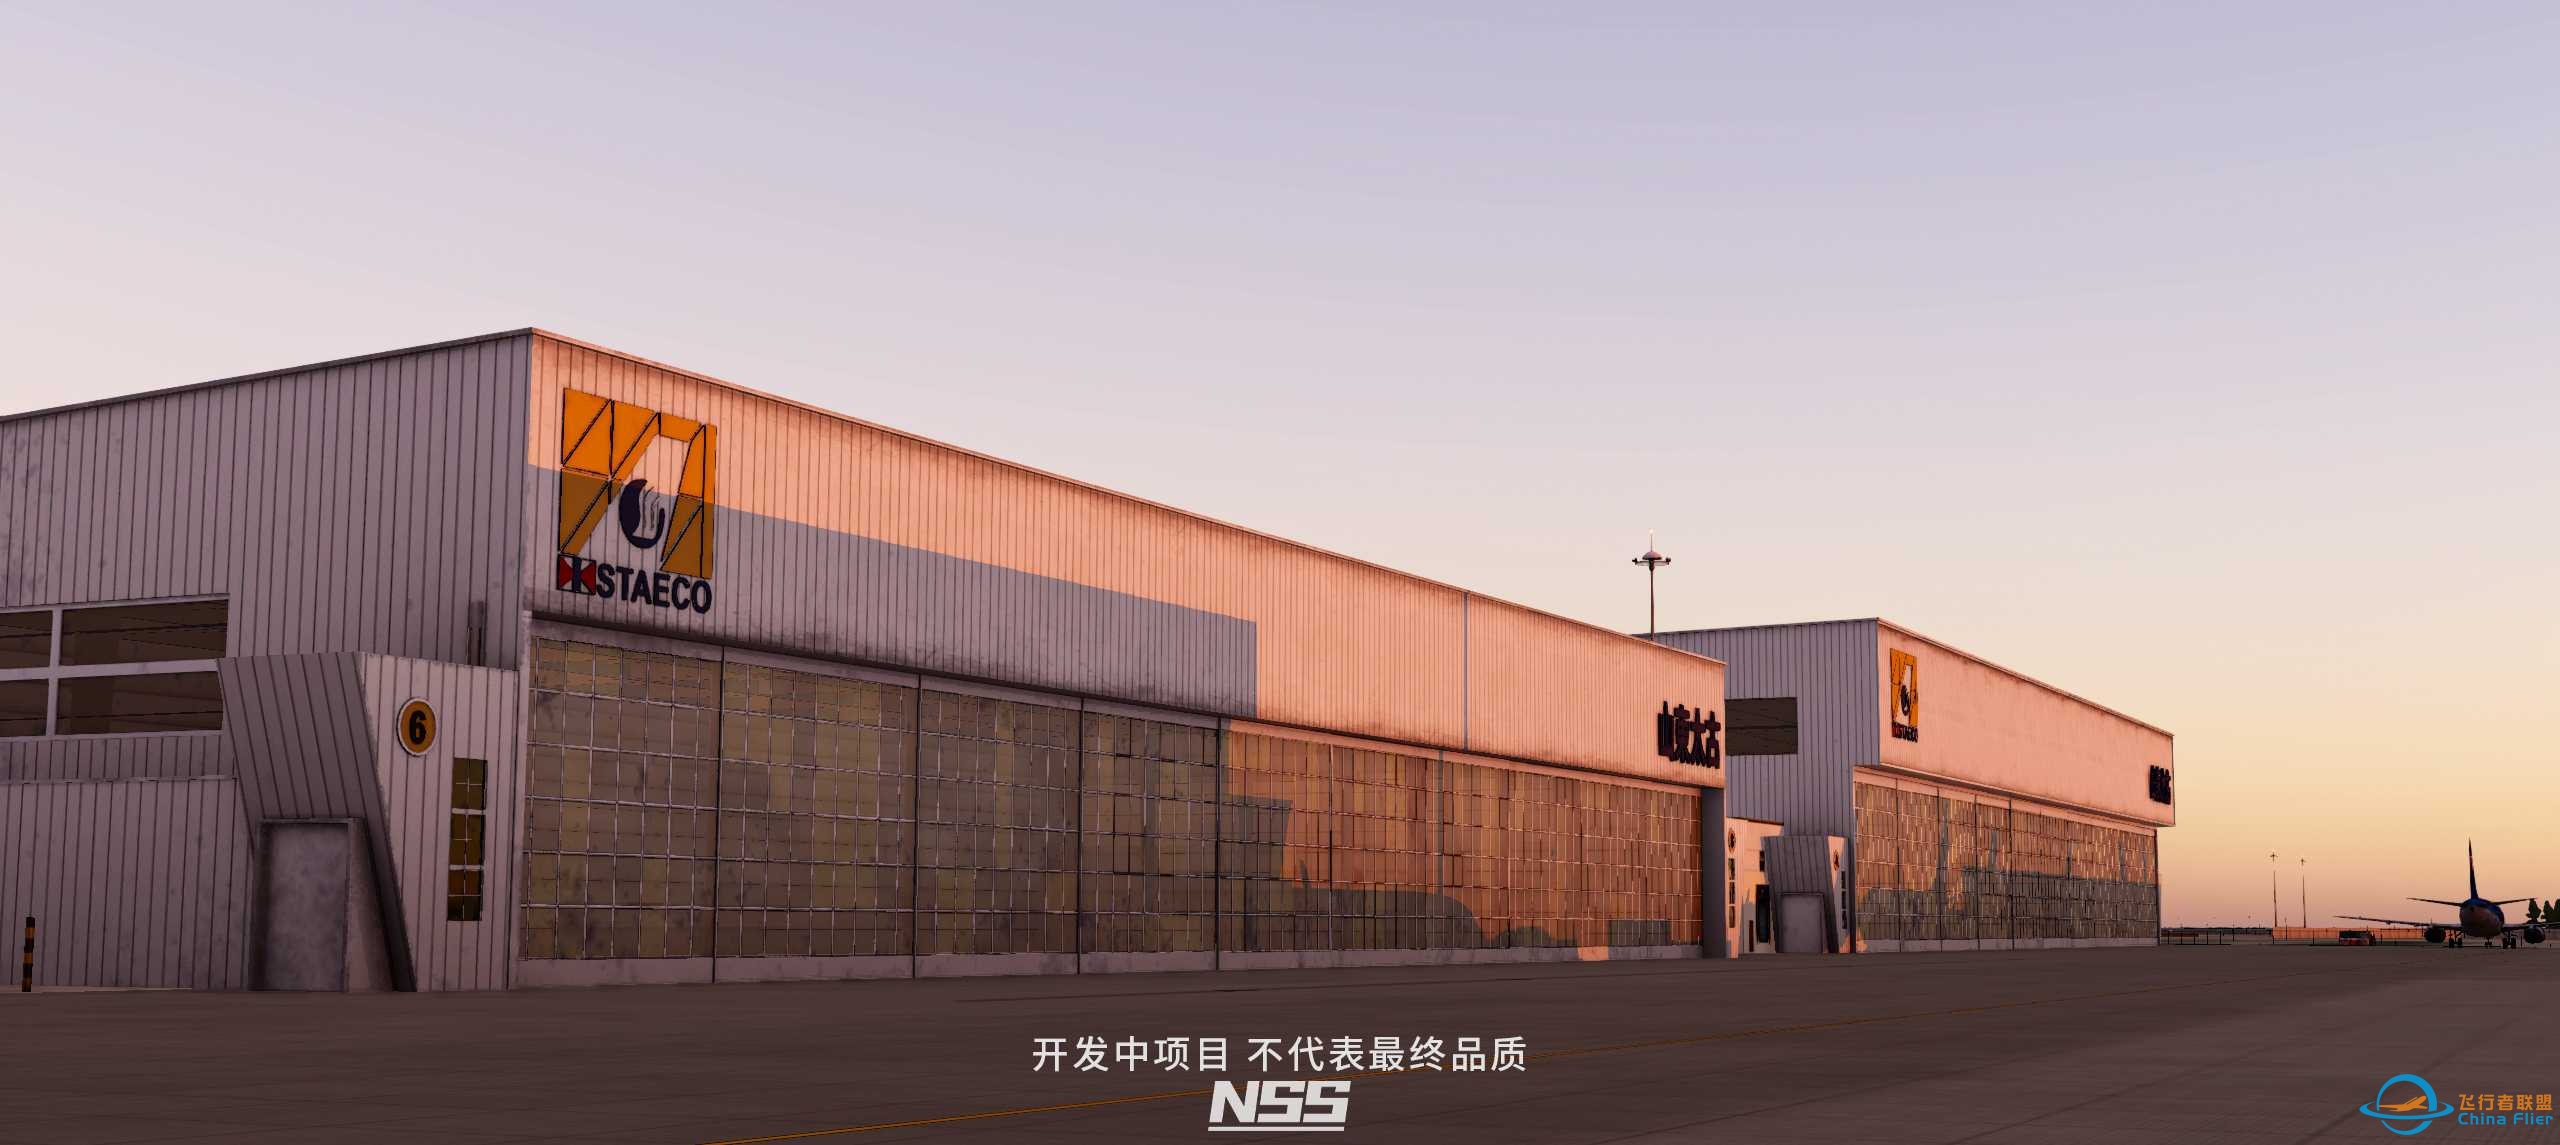 NSS地景开发组 ZSJN 济南遥墙国际机场项目预览 兼公布-9278 